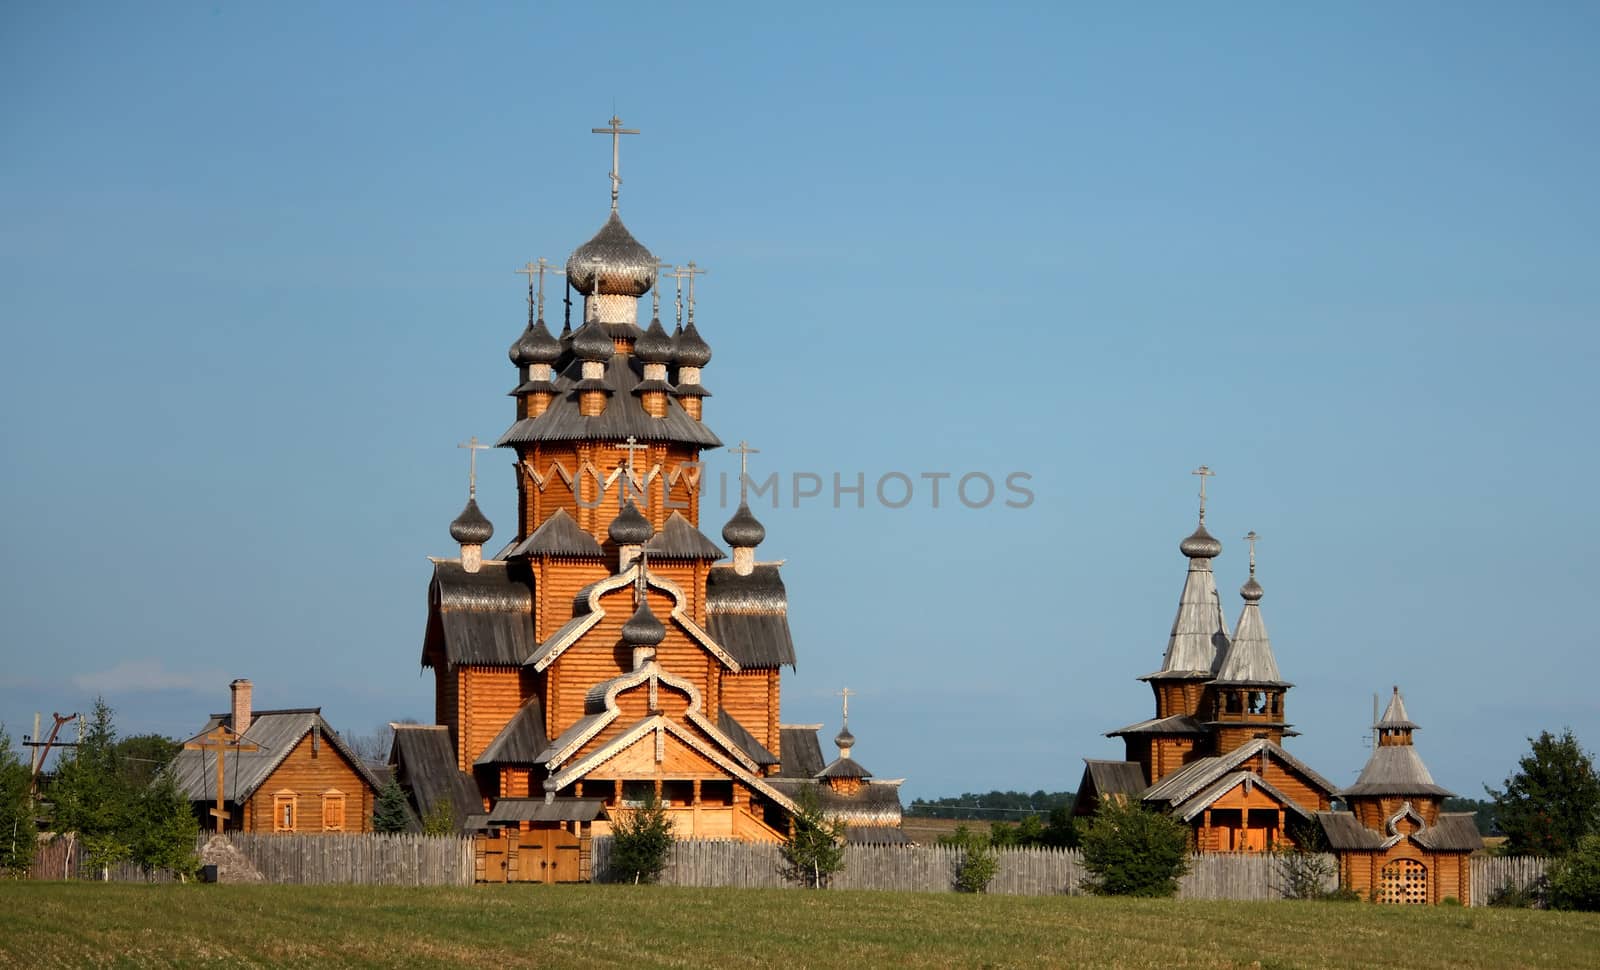 Village with a church by dedmorozz